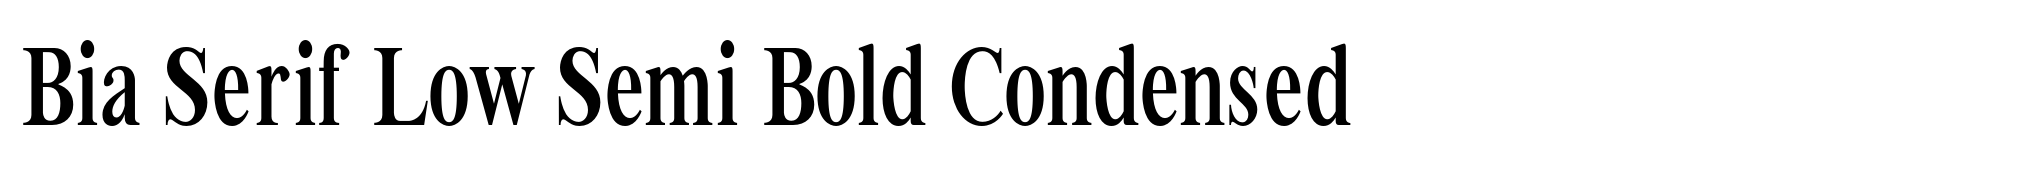 Bia Serif Low Semi Bold Condensed image